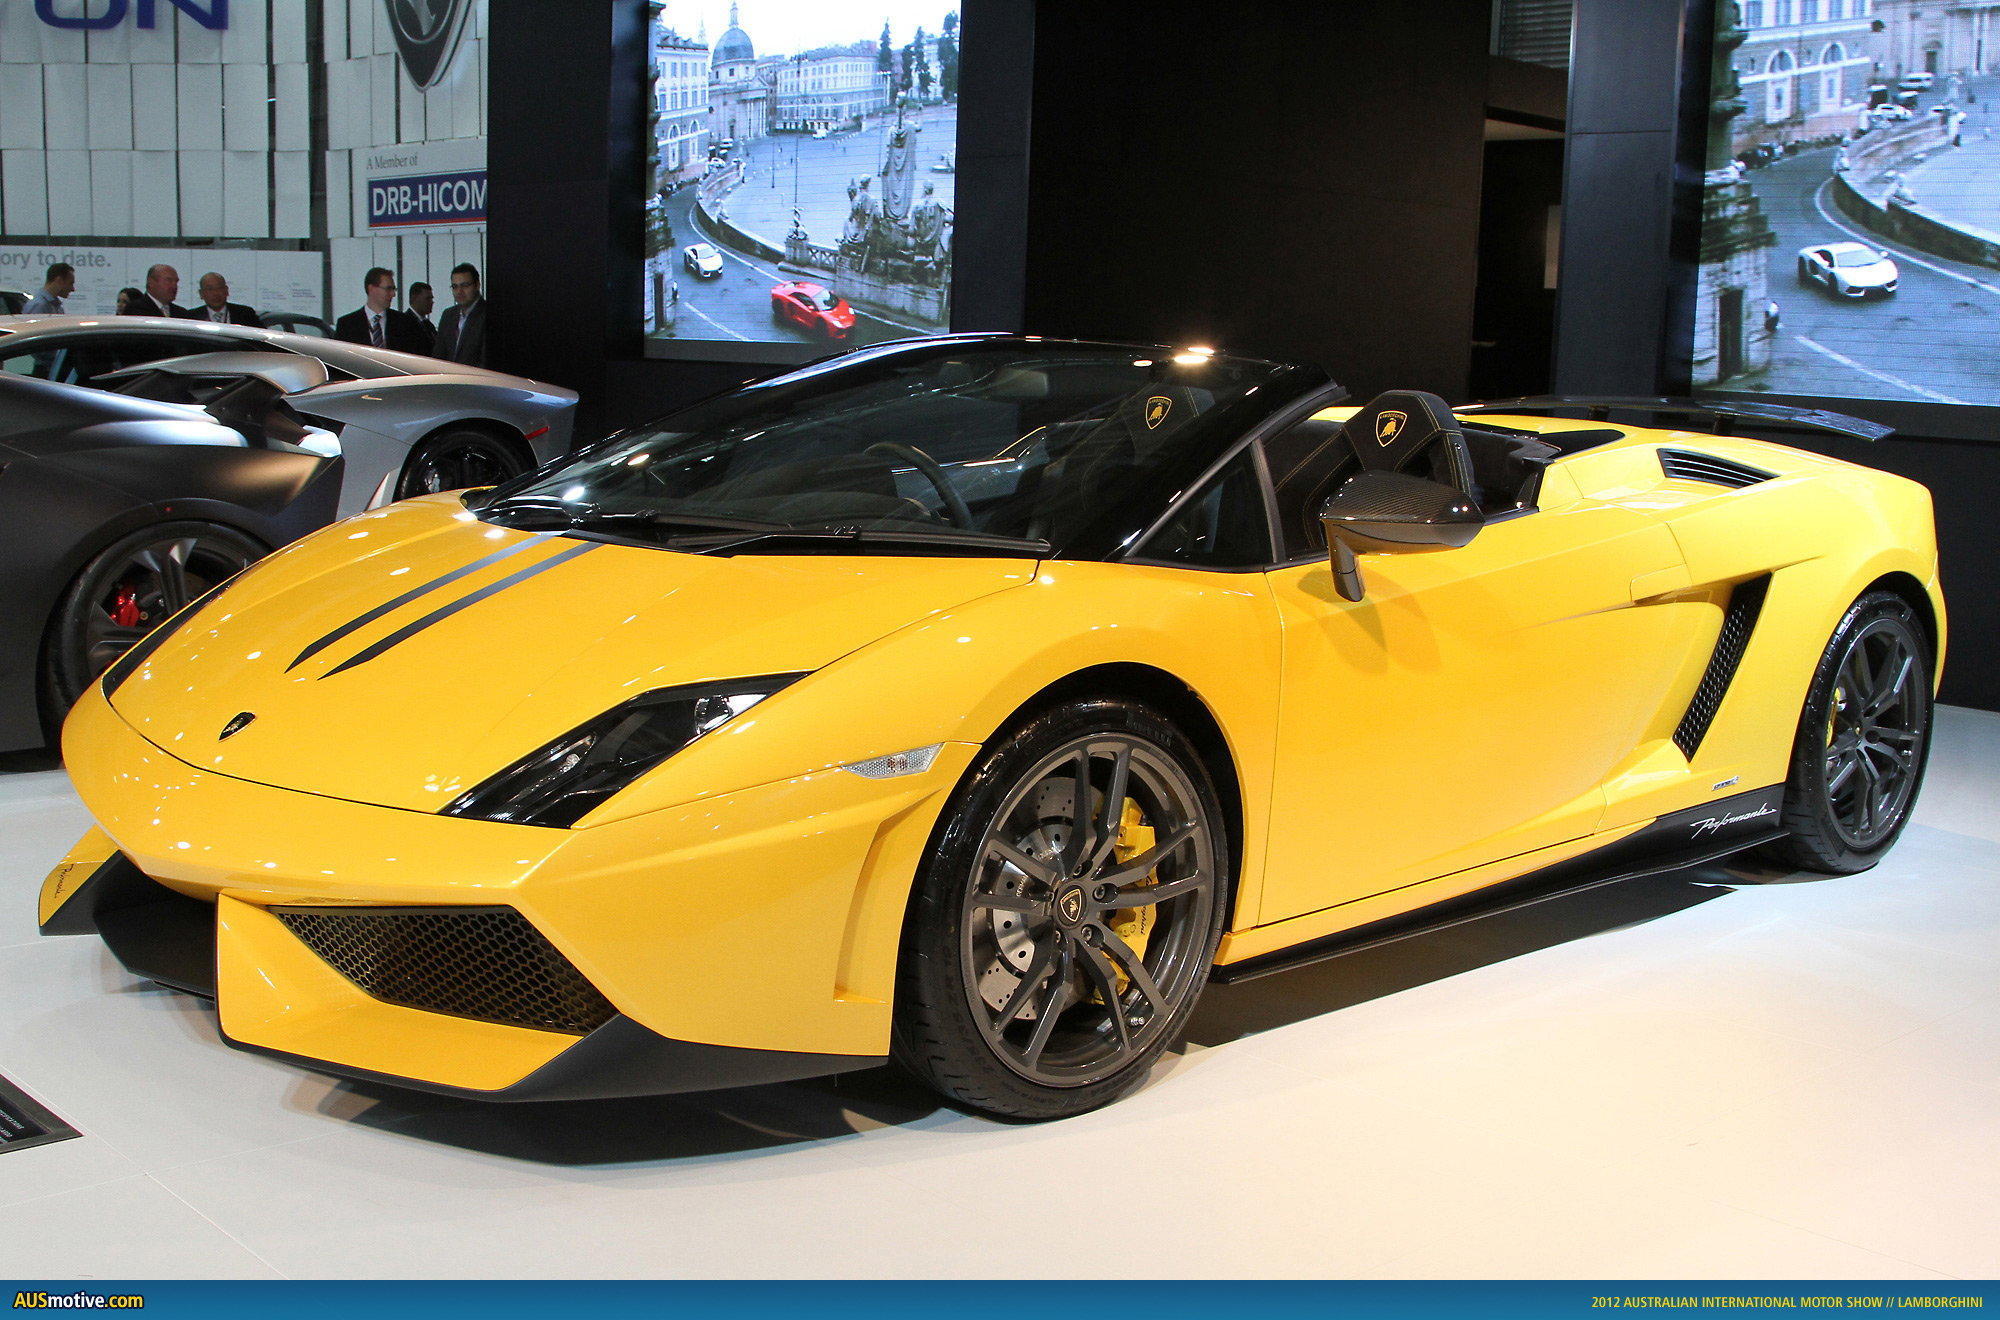 AUSmotive.com » Administrators claim Lamborghini Sydney stock